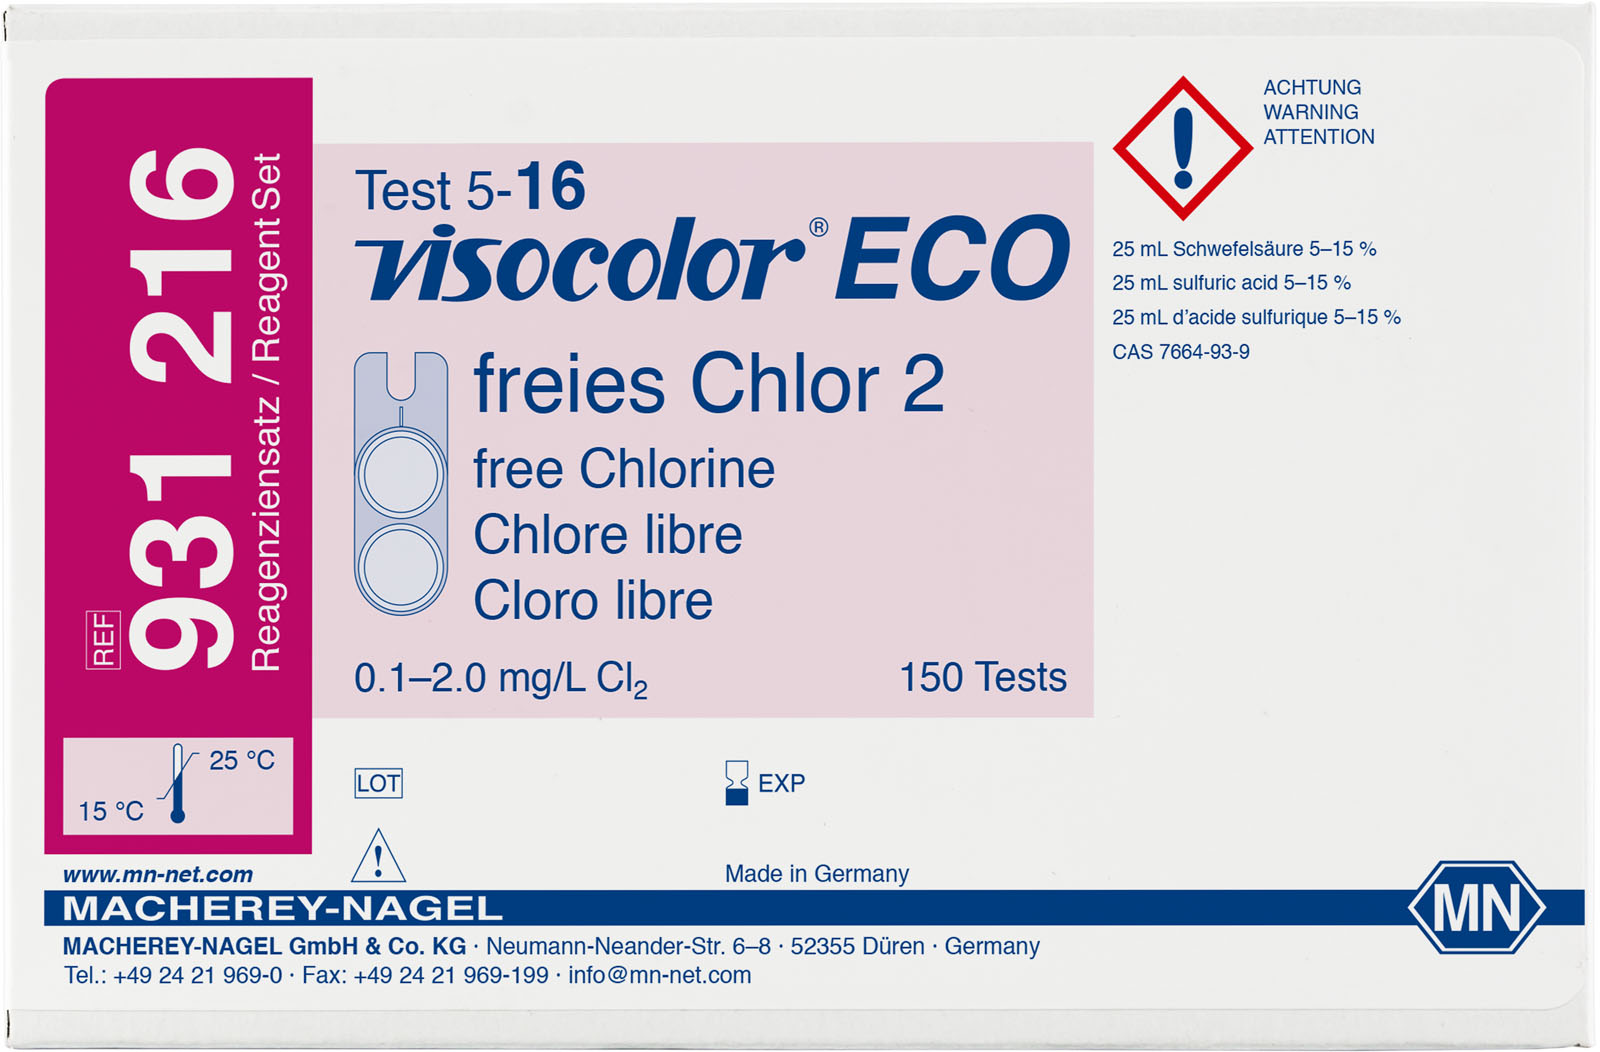 VISOCOLOR ECO freies Chlor 2